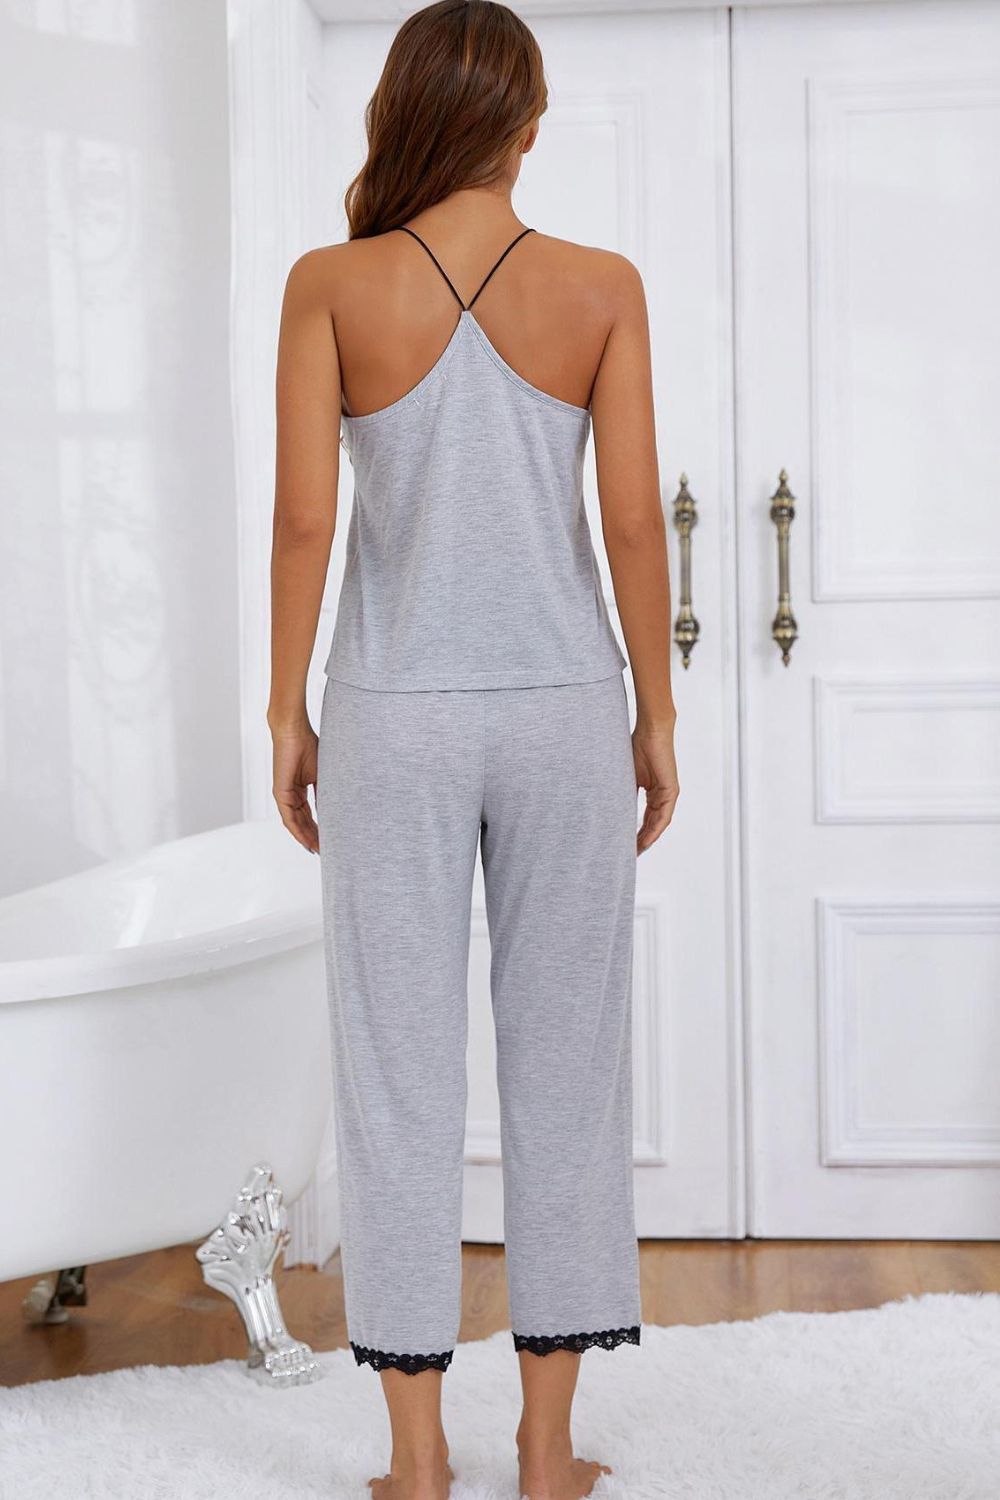 Women's Halter Neck Cami and Lace Trim Pajama Set